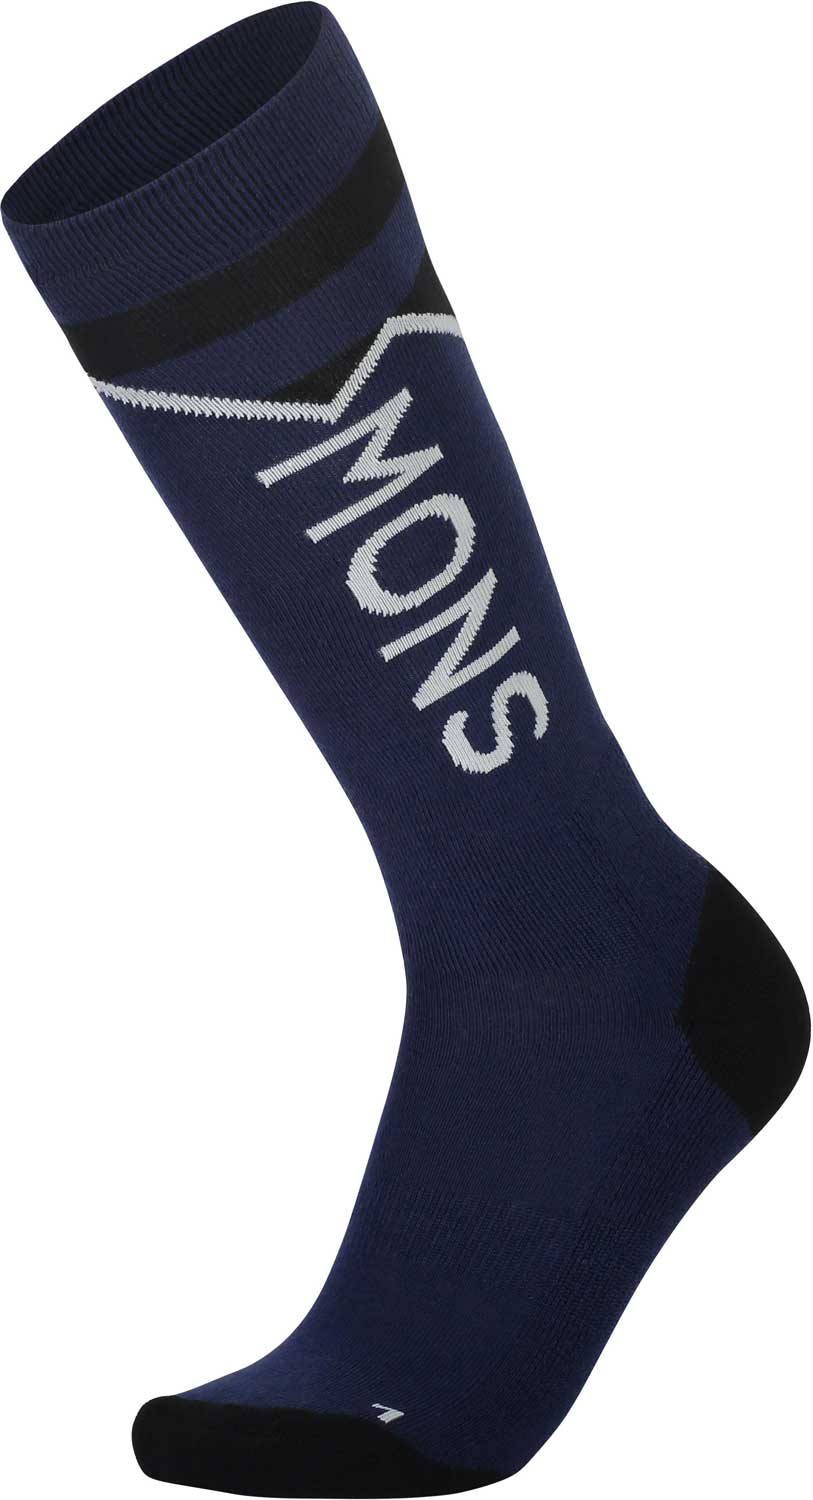 Men’s merino wool ski socks